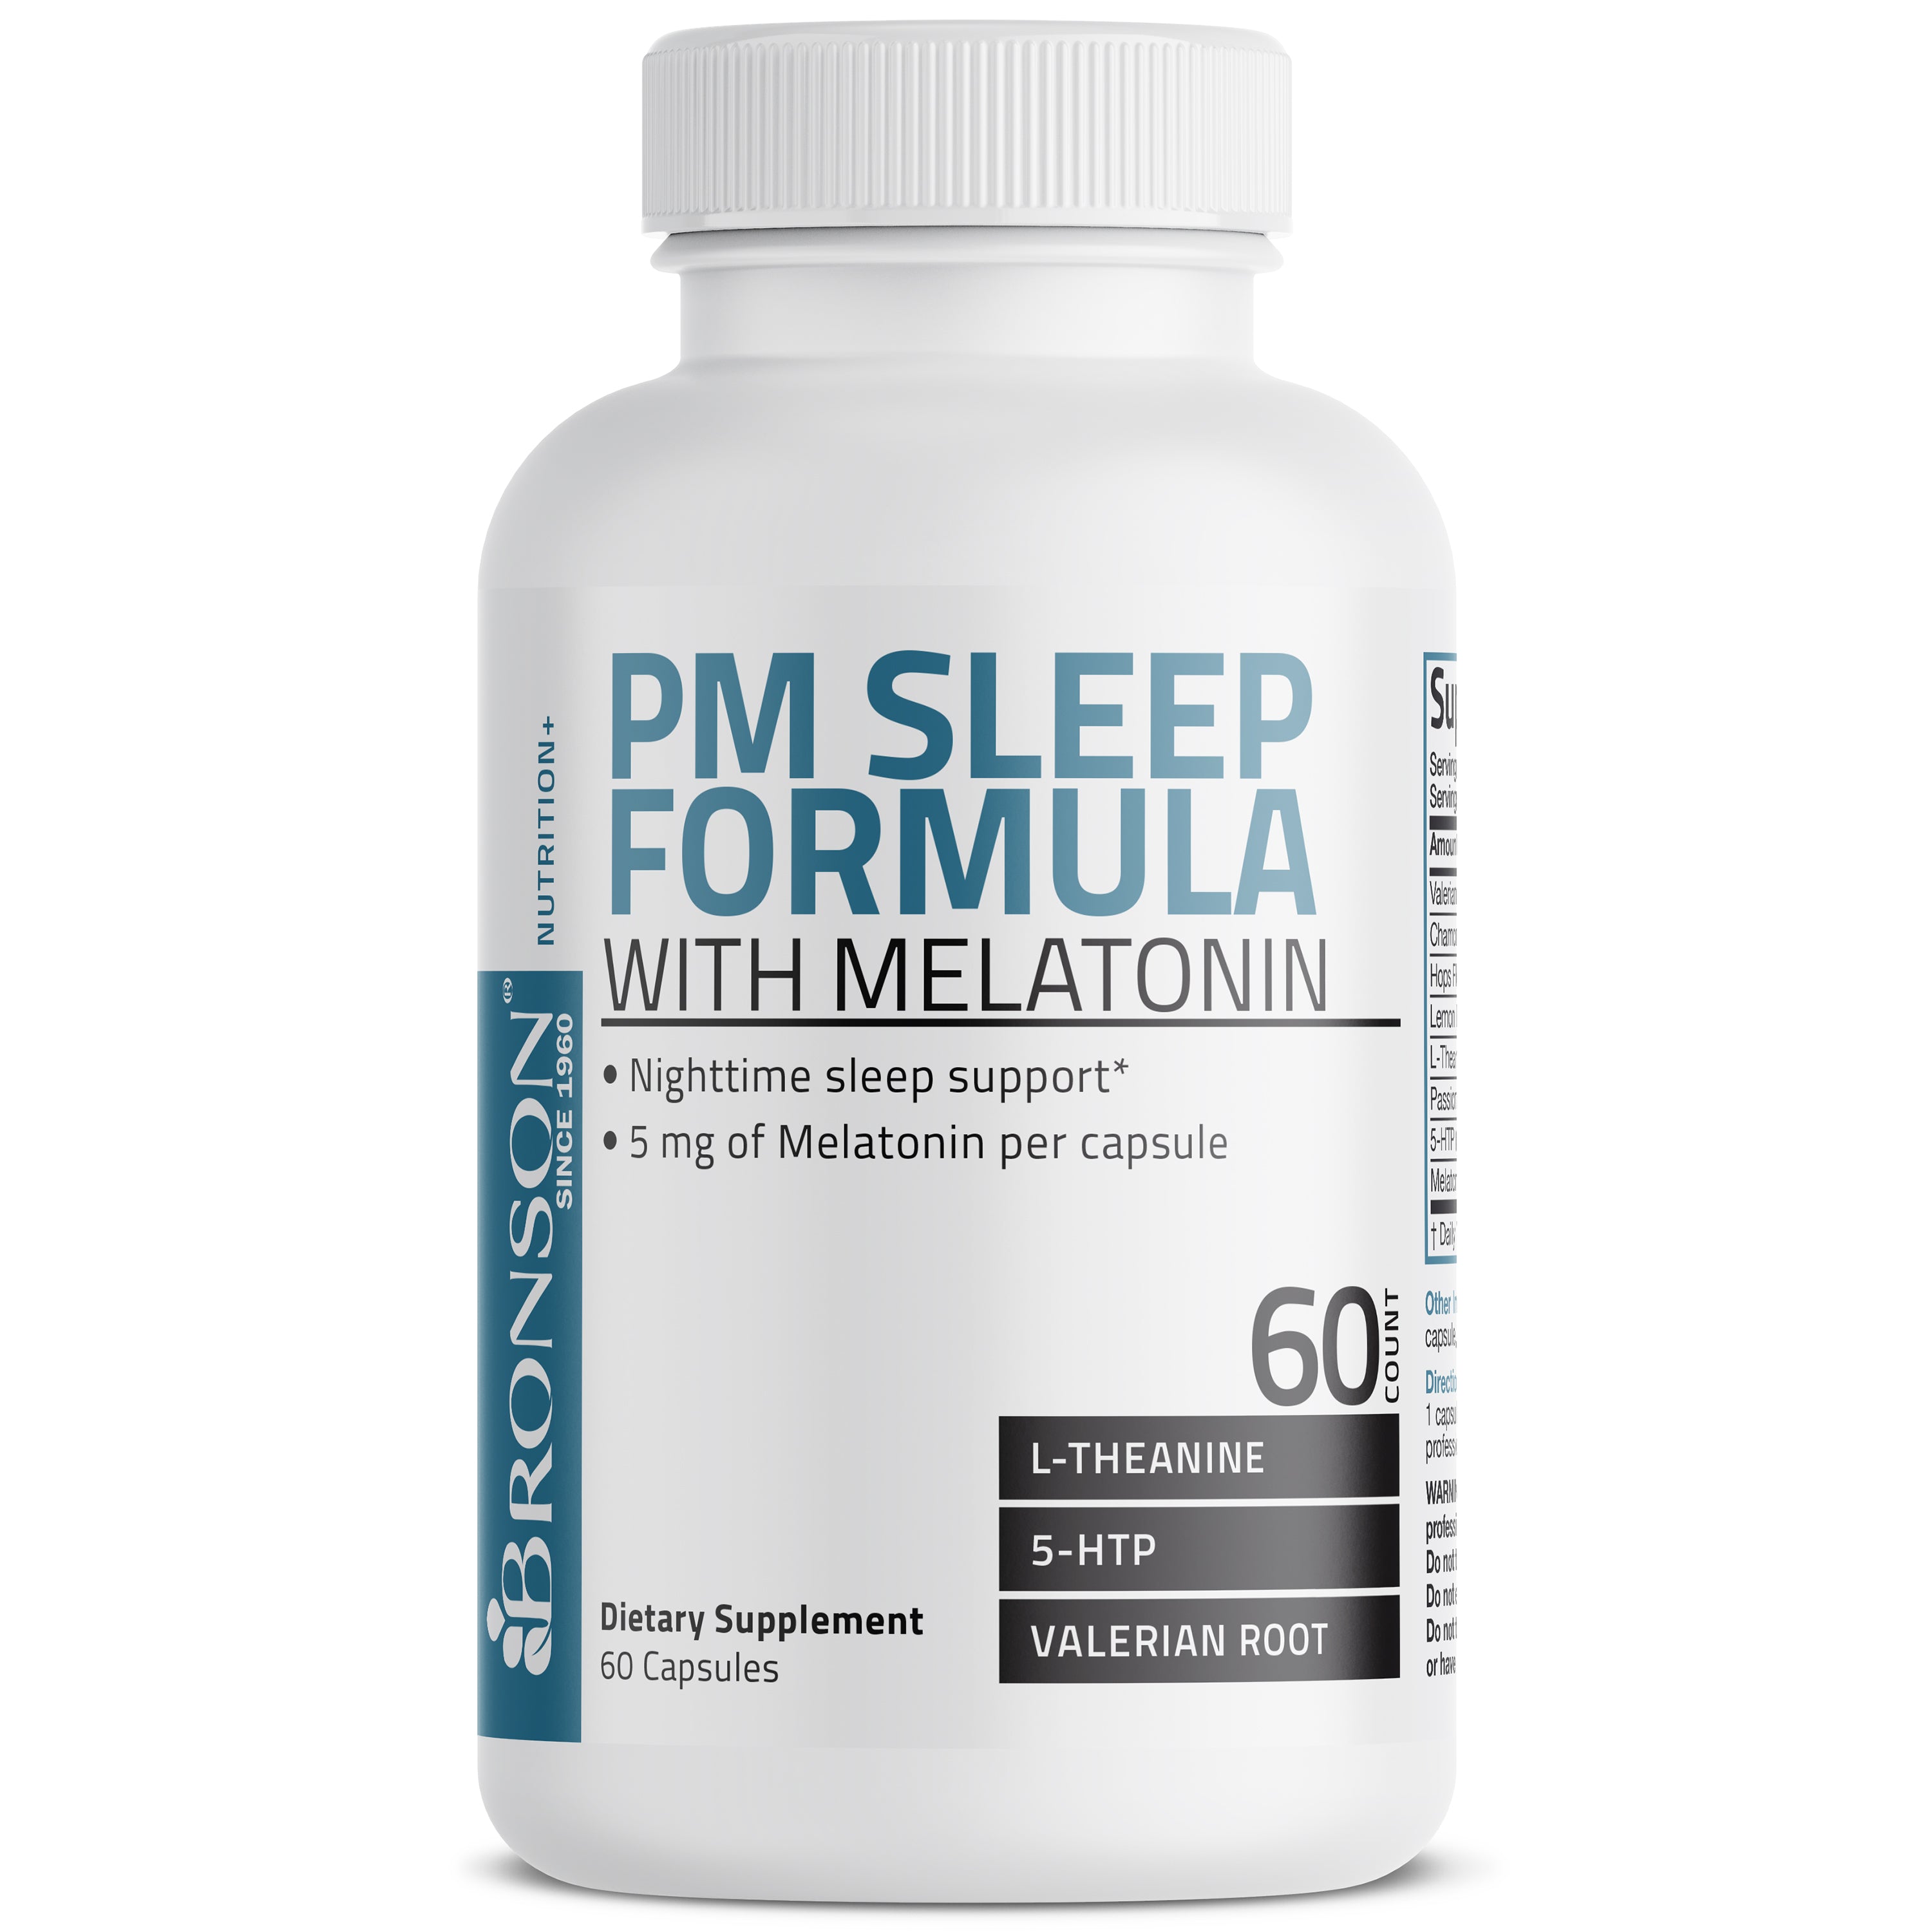 PM Sleep Formula with Melatonin - 60 Capsules view 1 of 4